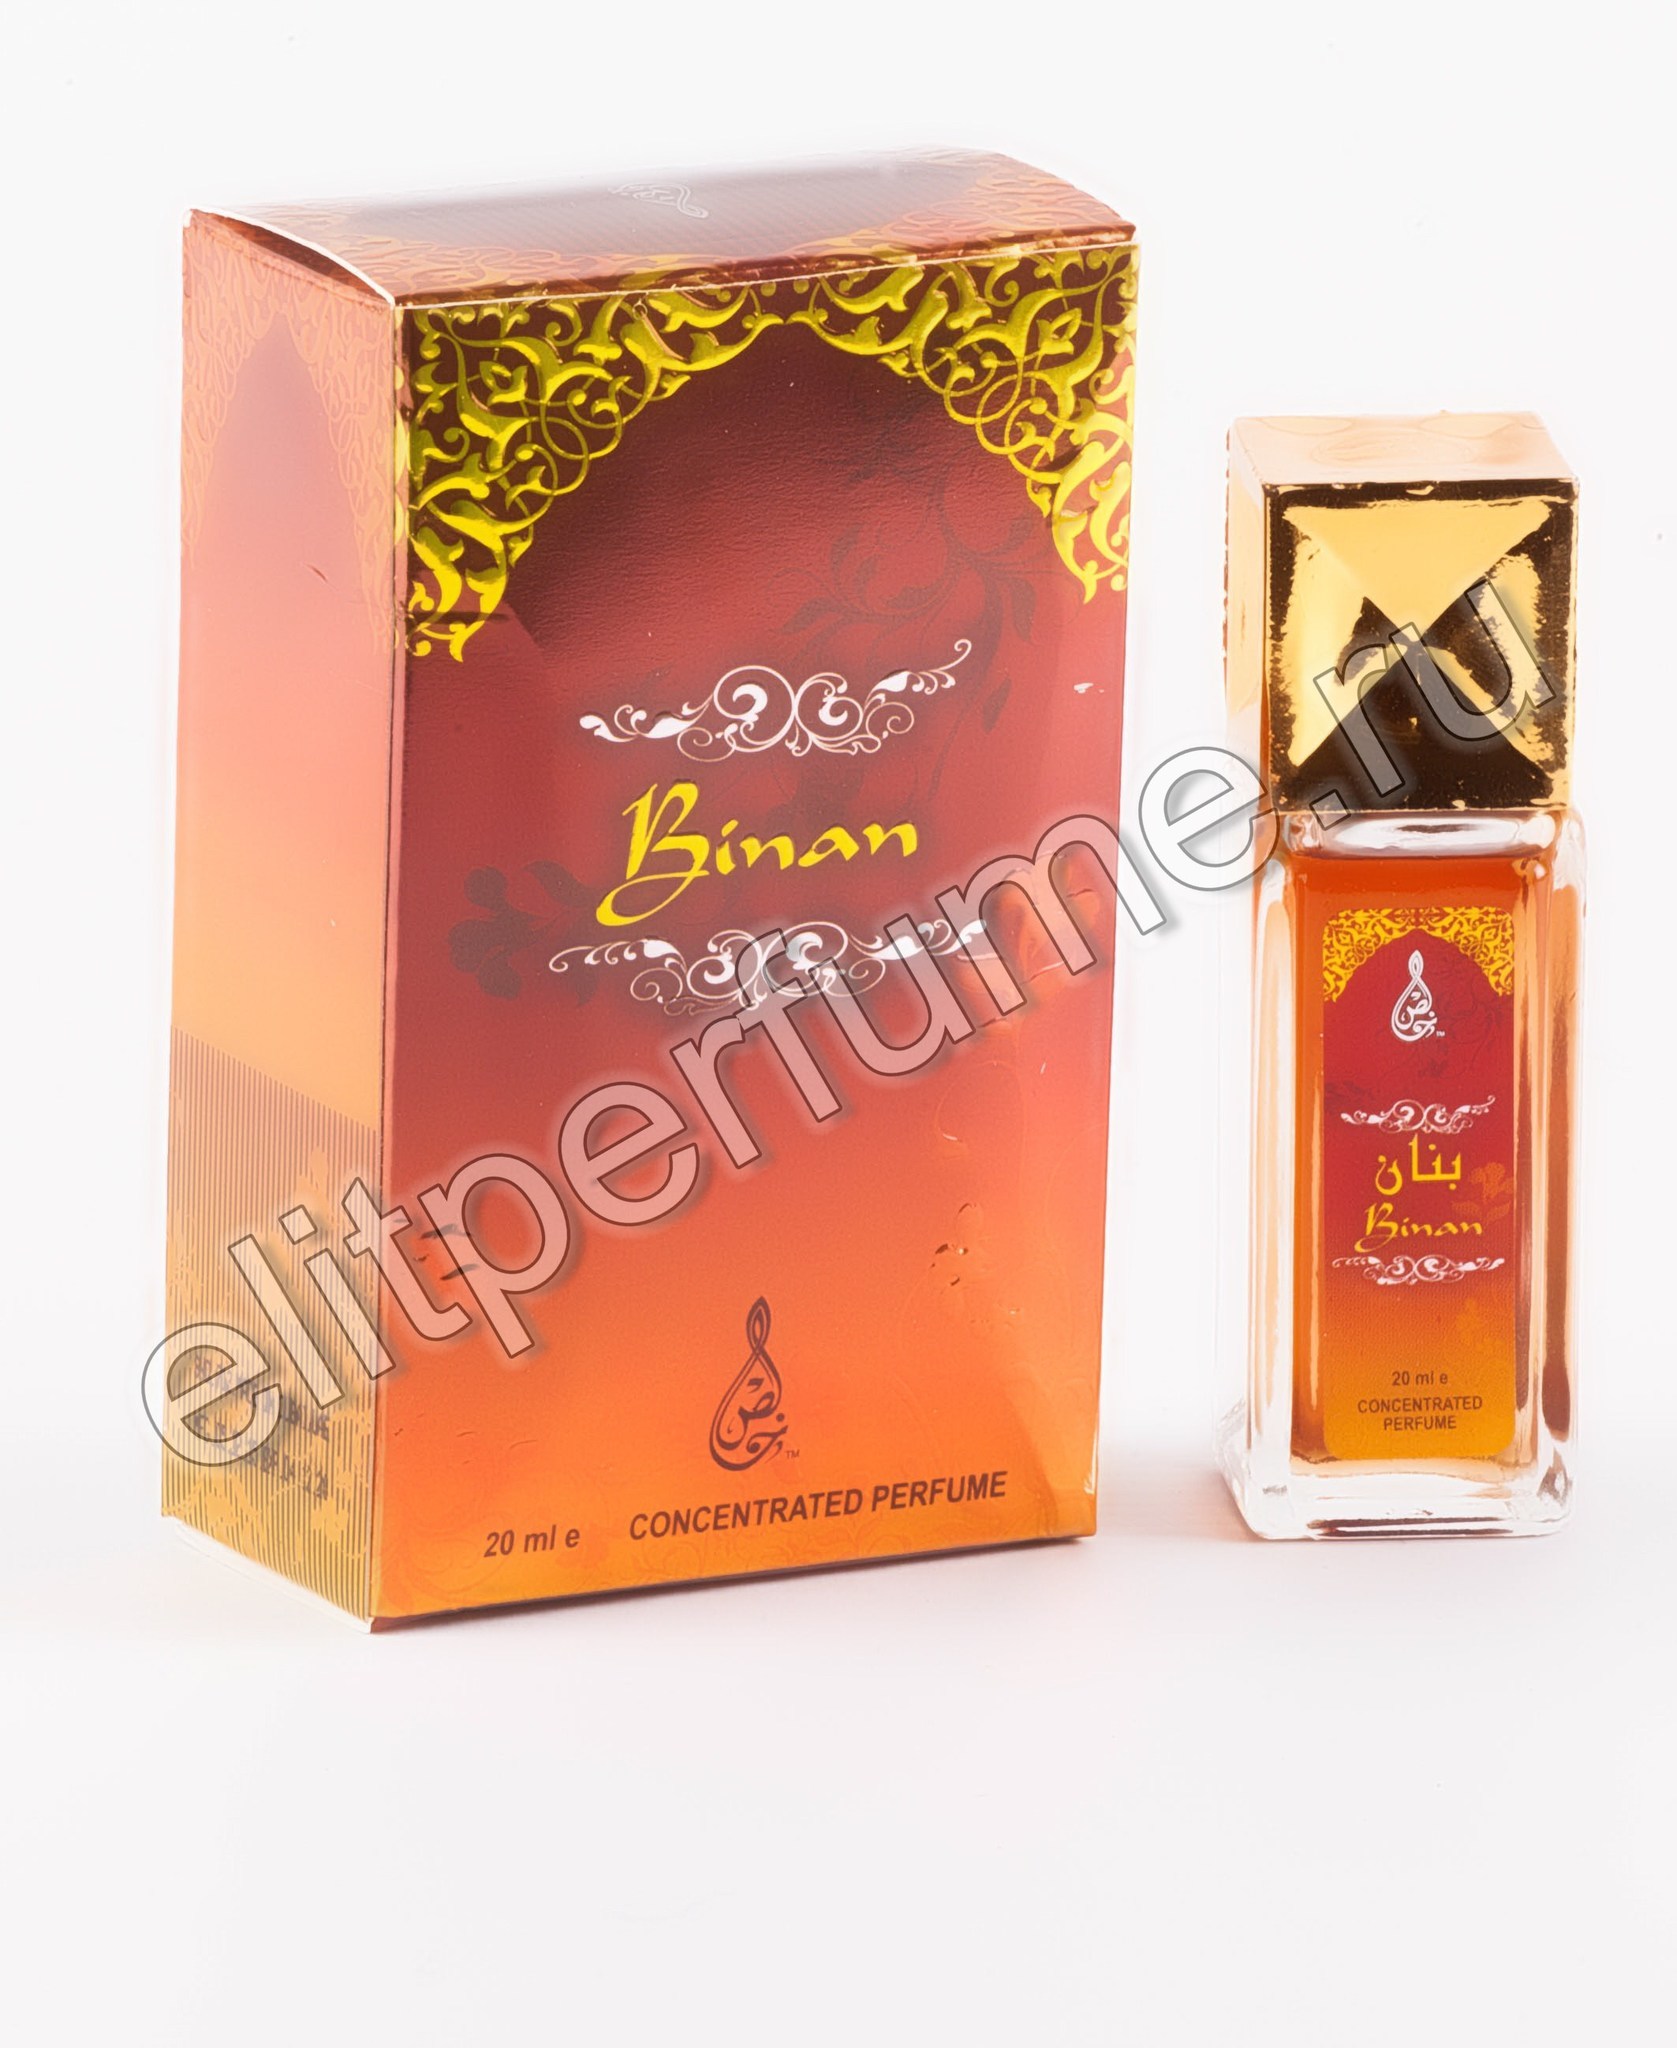 Пробник для Binan Бинан 1 мл арабские масляные духи от Халис Khalis Perfumes